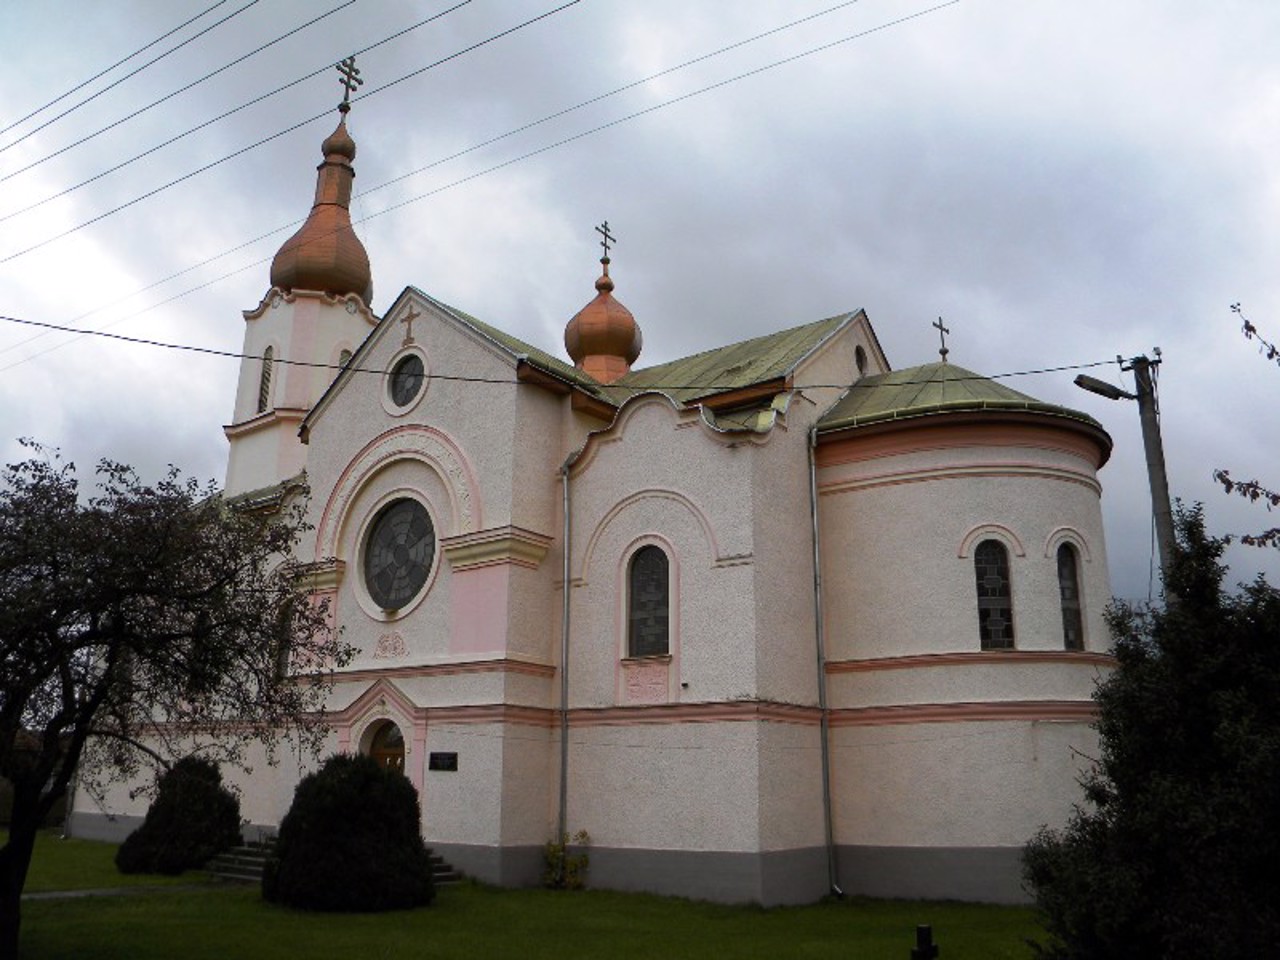 Saint Illina Church, Chynadiiovo